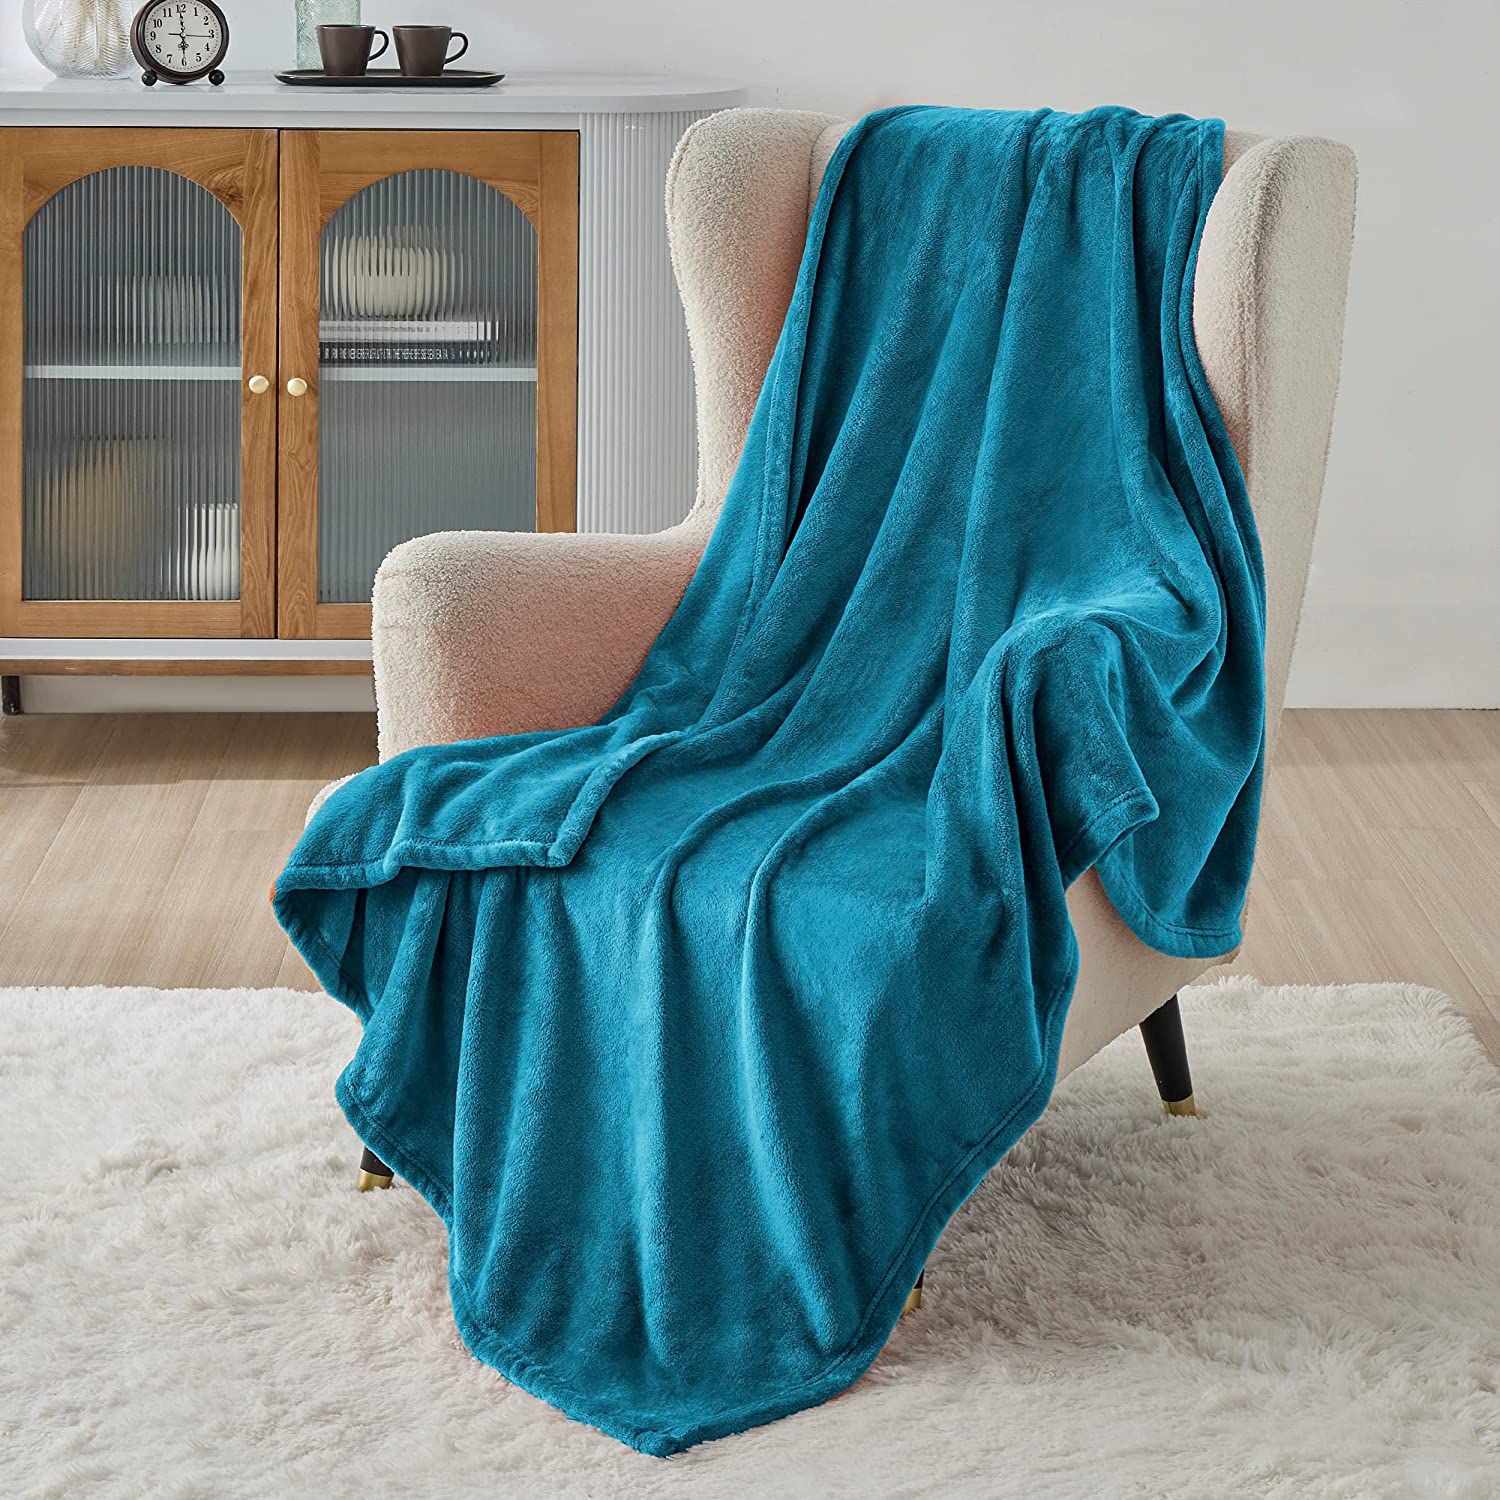 Bedsure Grey Throw Blanket Fleece Blanket Cozy Soft Lightweight Microfiber  Blanket for Couch : : Home & Kitchen